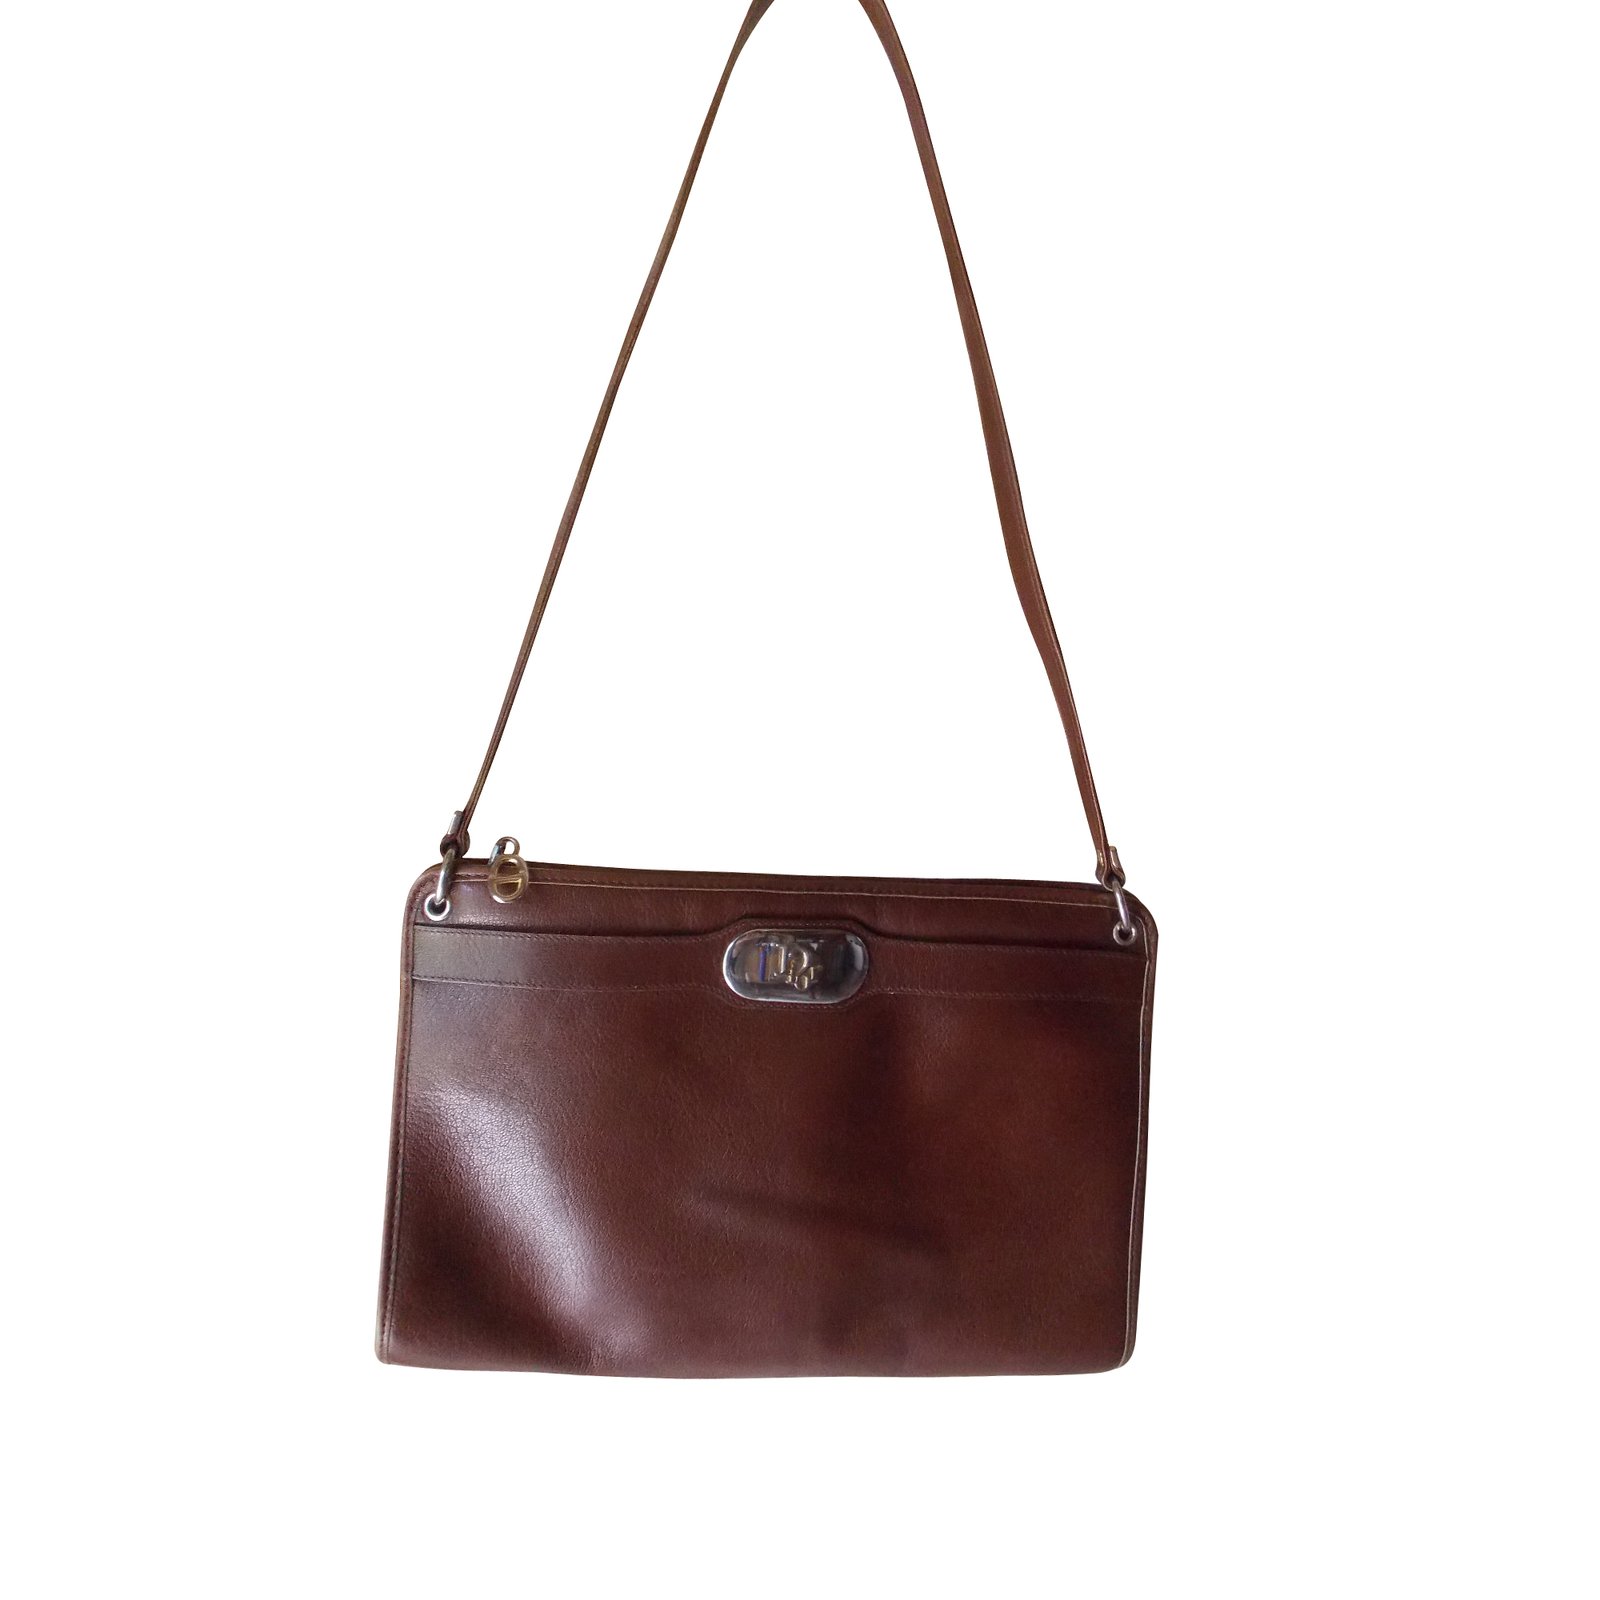 christian dior brown leather bag